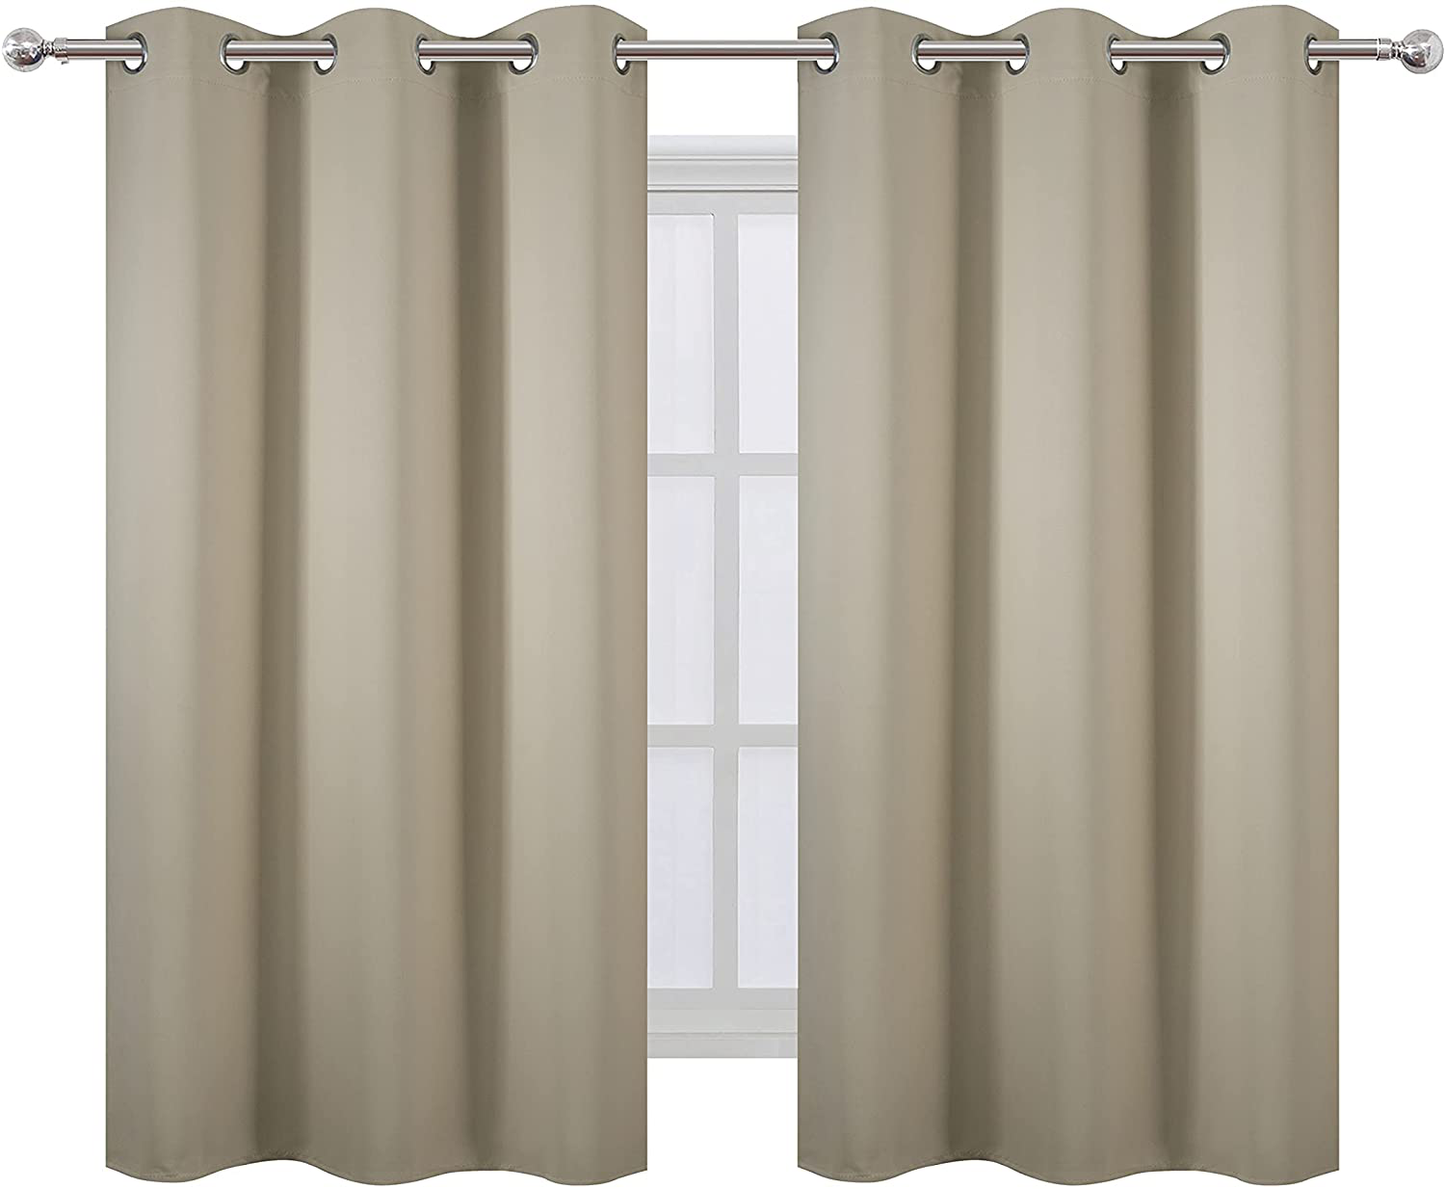 LEMOMO Light Green Thermal Blackout Curtains/38 x 84 Inch/Set of 2 Panels Room Darkening Curtains for Bedroom